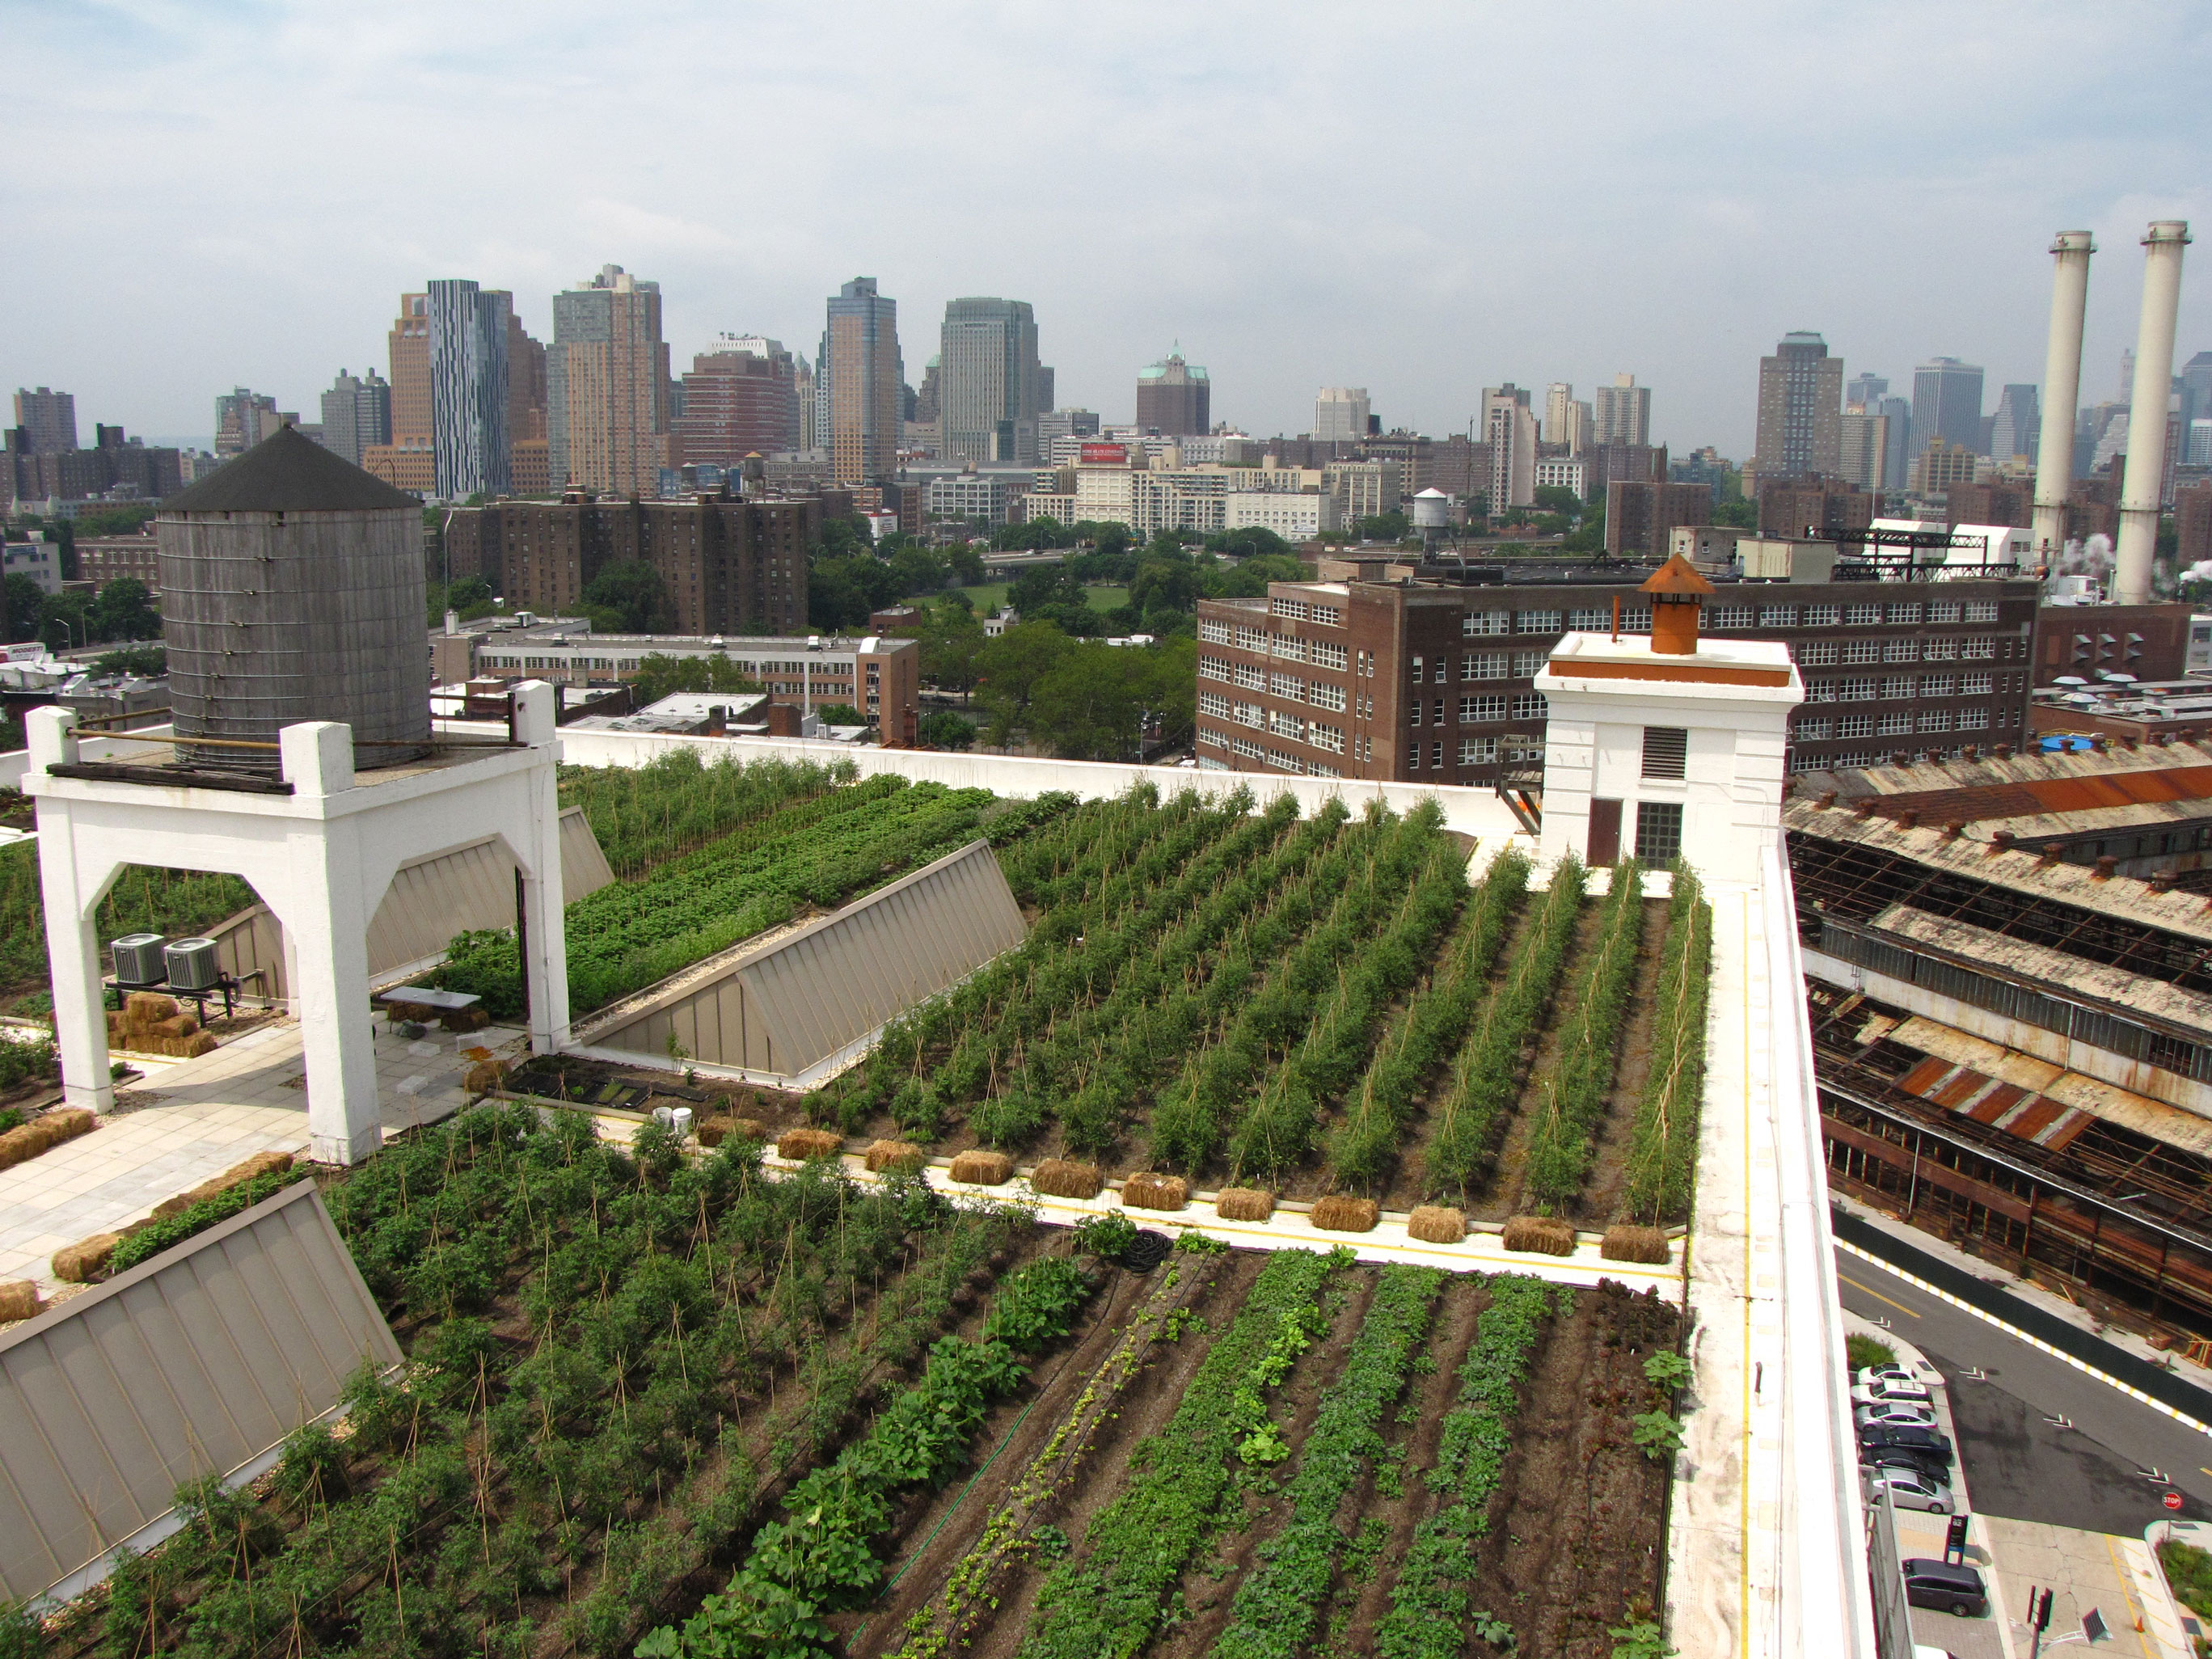 Brooklyn Grange Rooftop Farm #2 at Brooklyn Navy Yard, Building No. 3 Featured Image